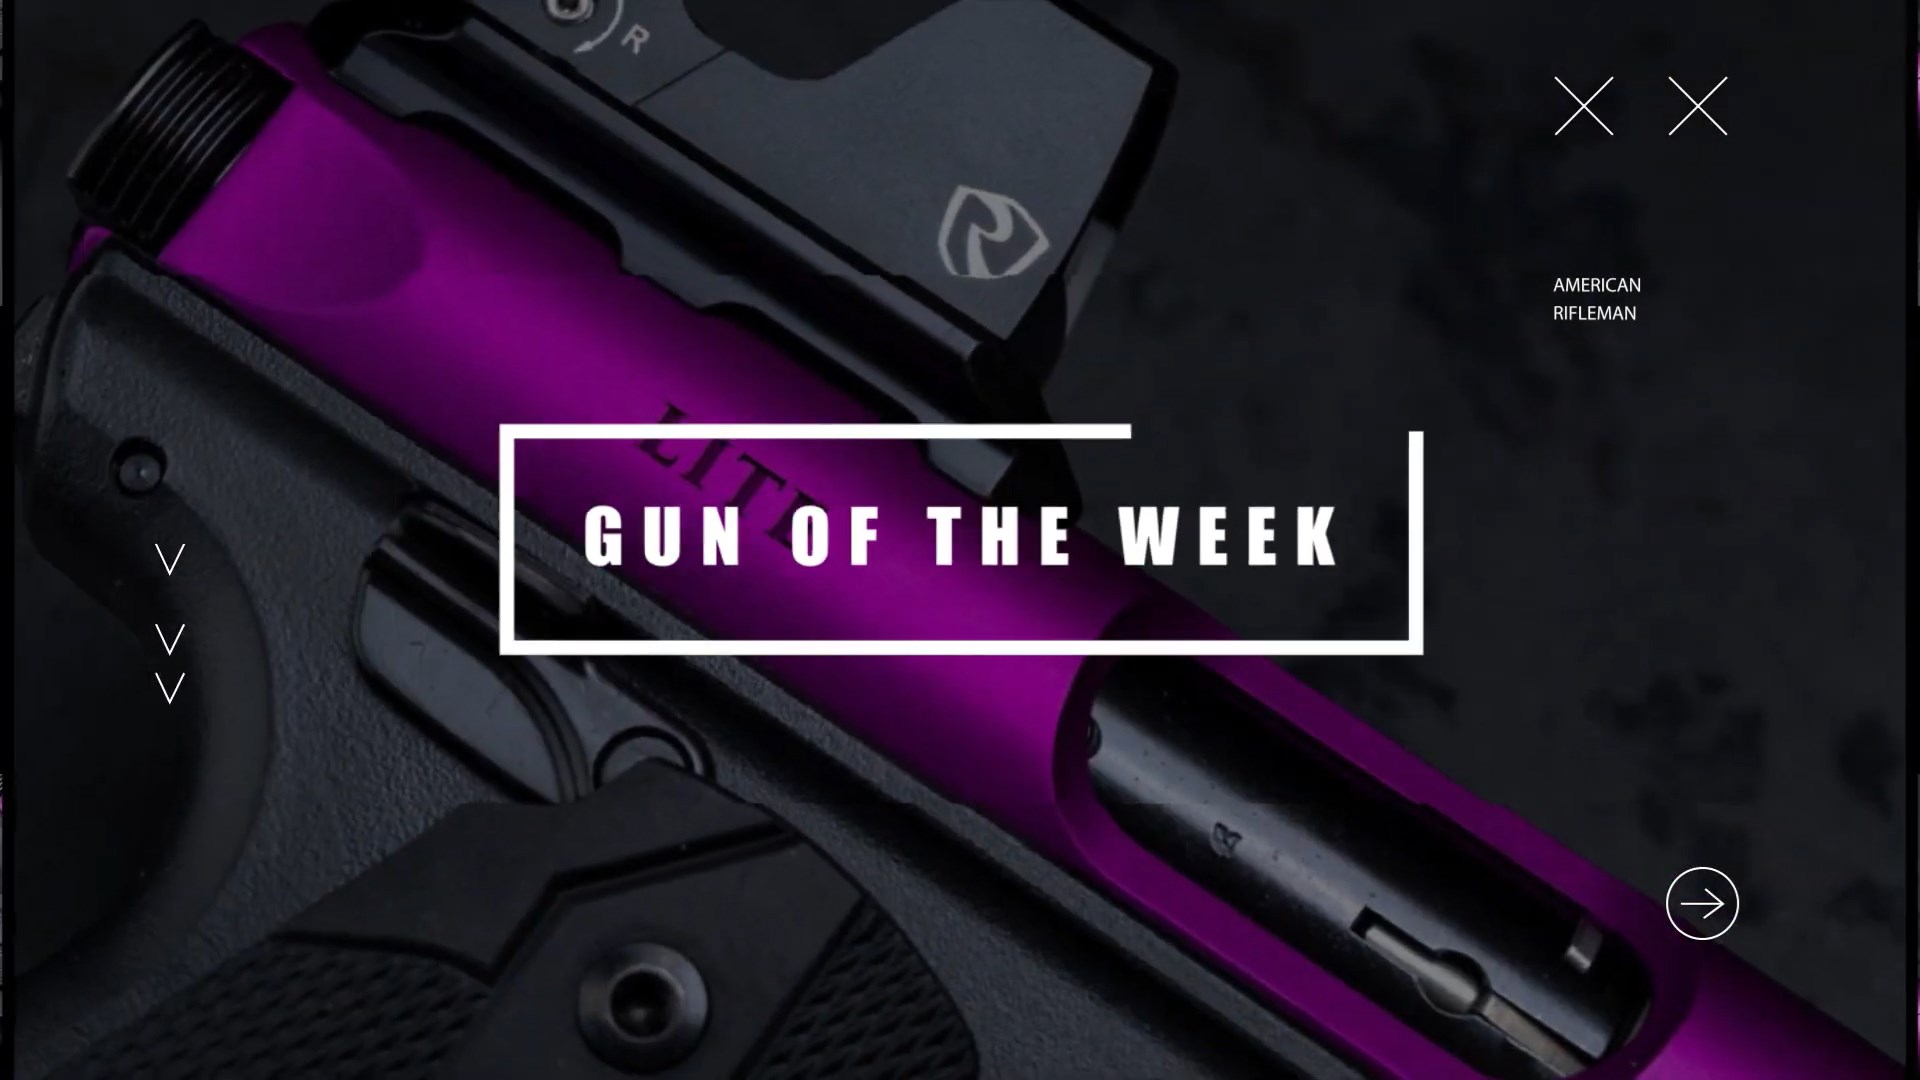 Gun Of The Week title screen purple gun background